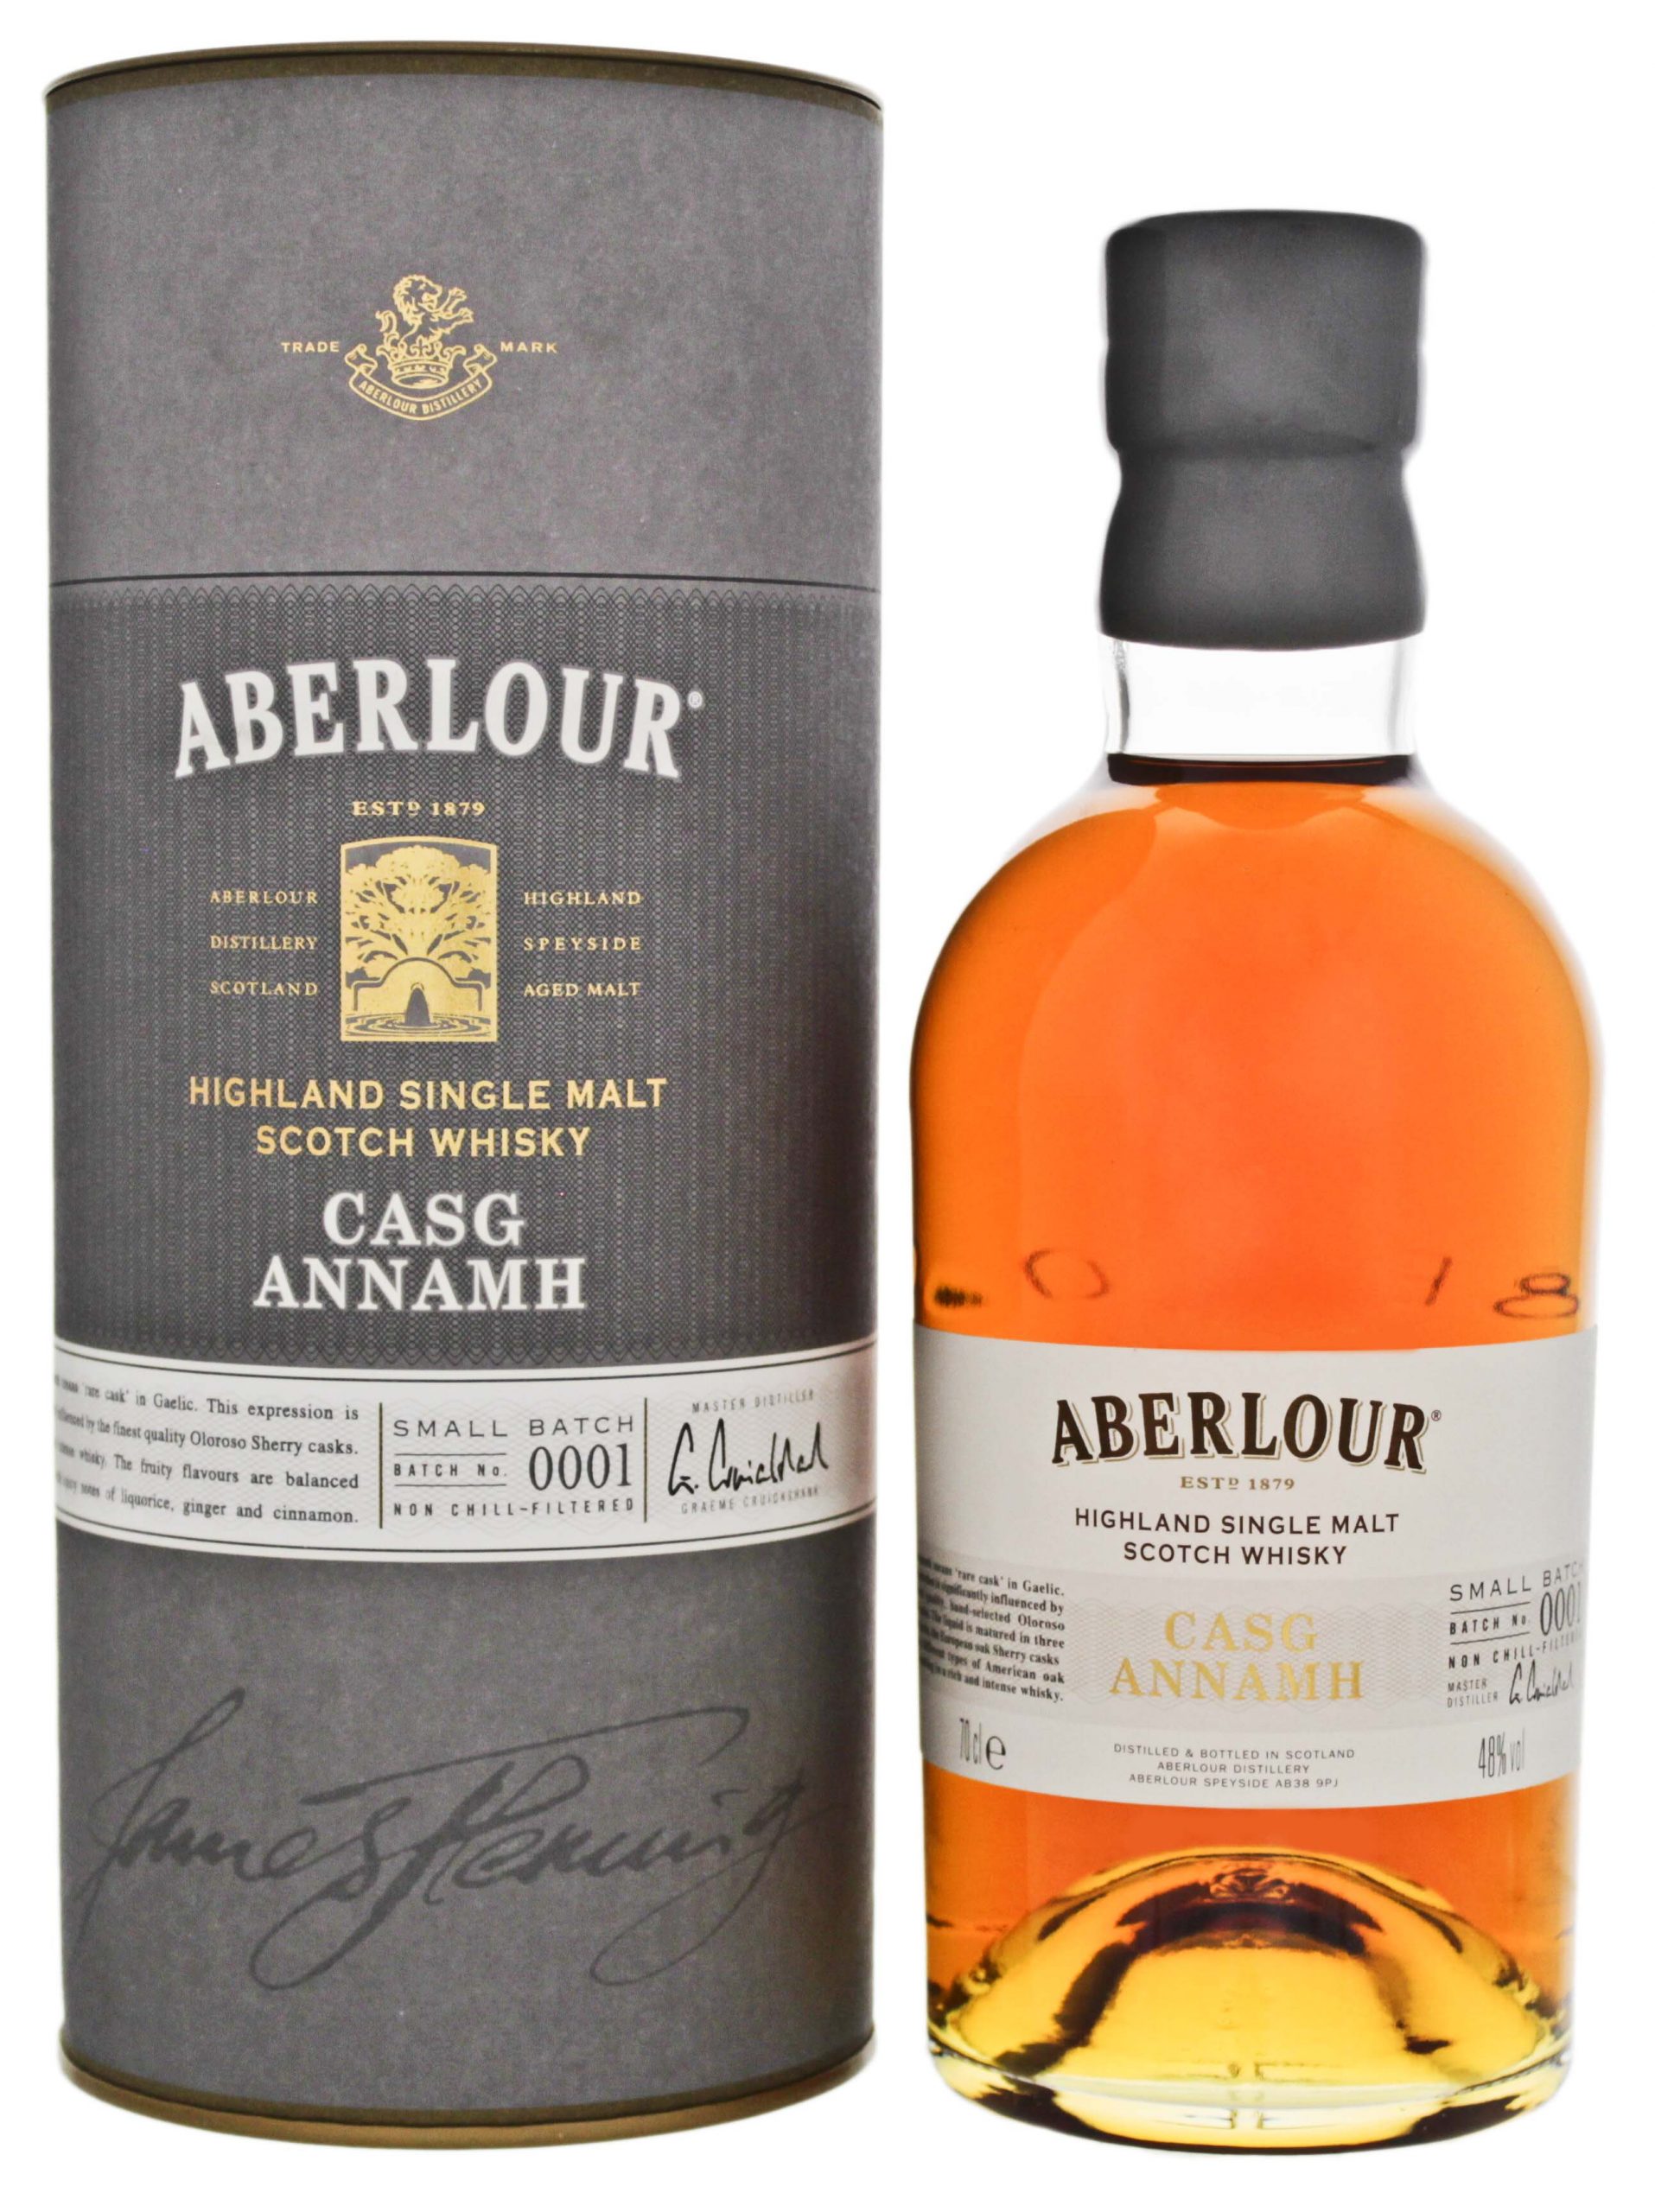 ABERLOUR CASG ANNAMH malt whisky 0.70 LTR 3-7 dagen - Slijterij "De Slijter" Dranken Speciaalzaak